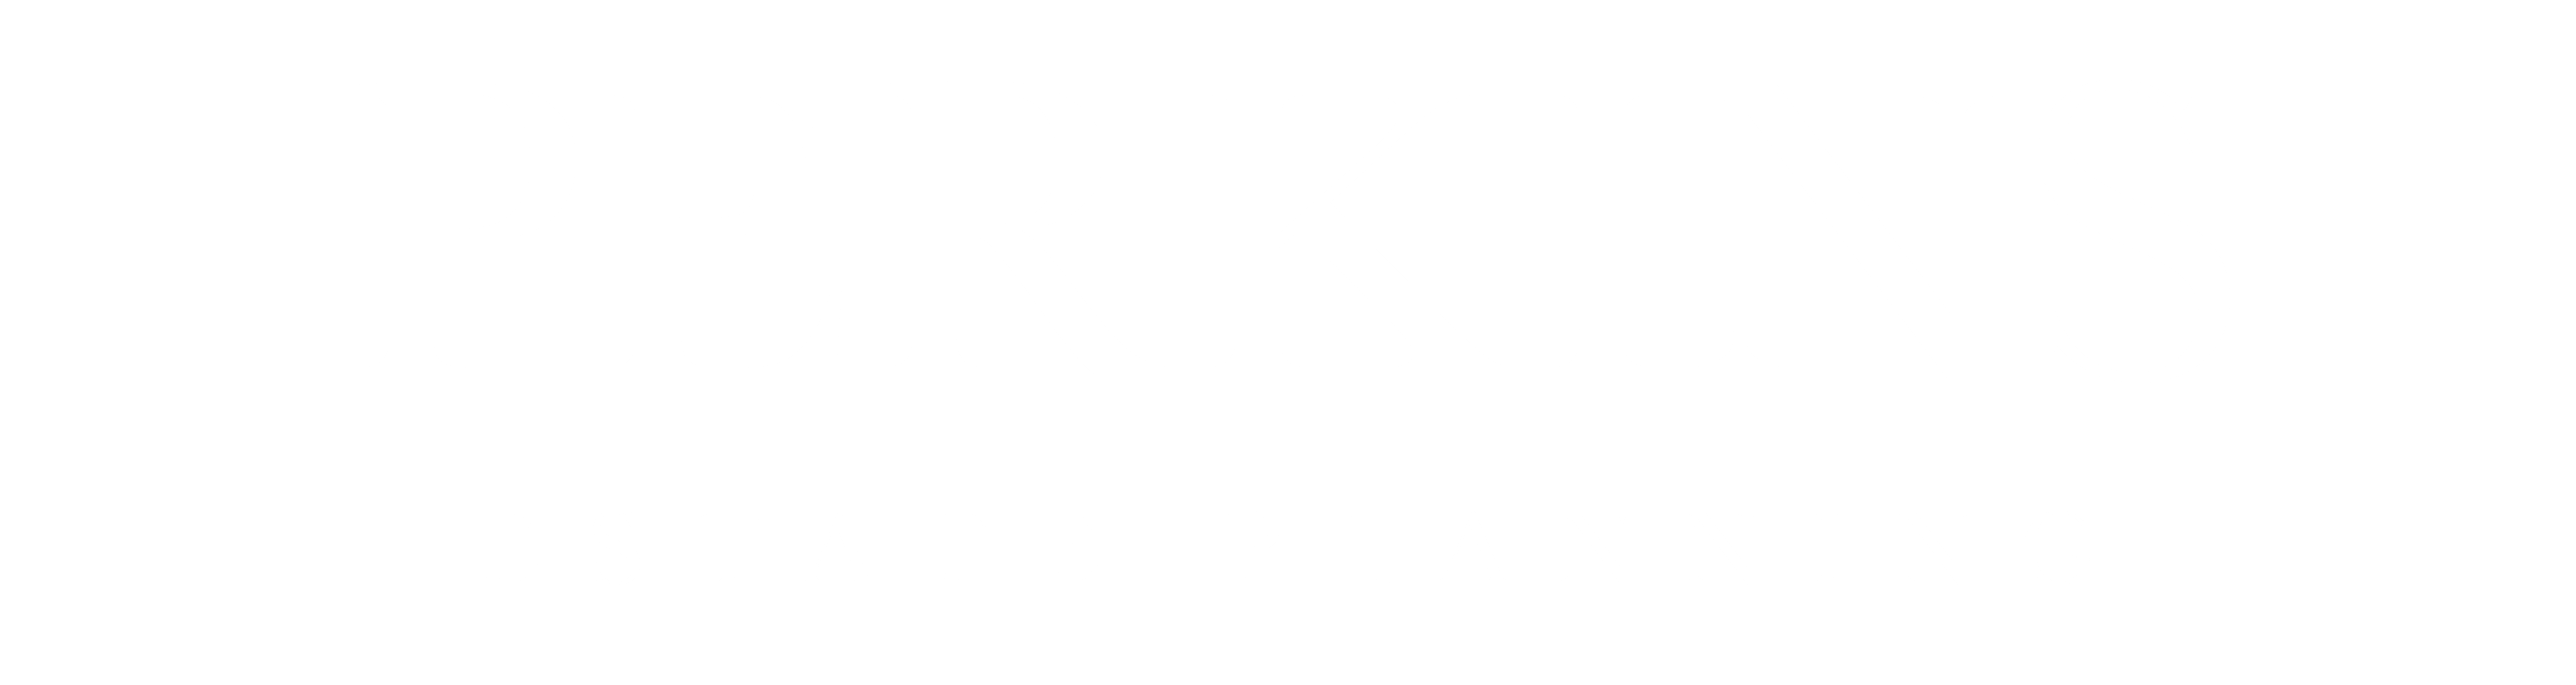 Perkins Estate Planning Logo